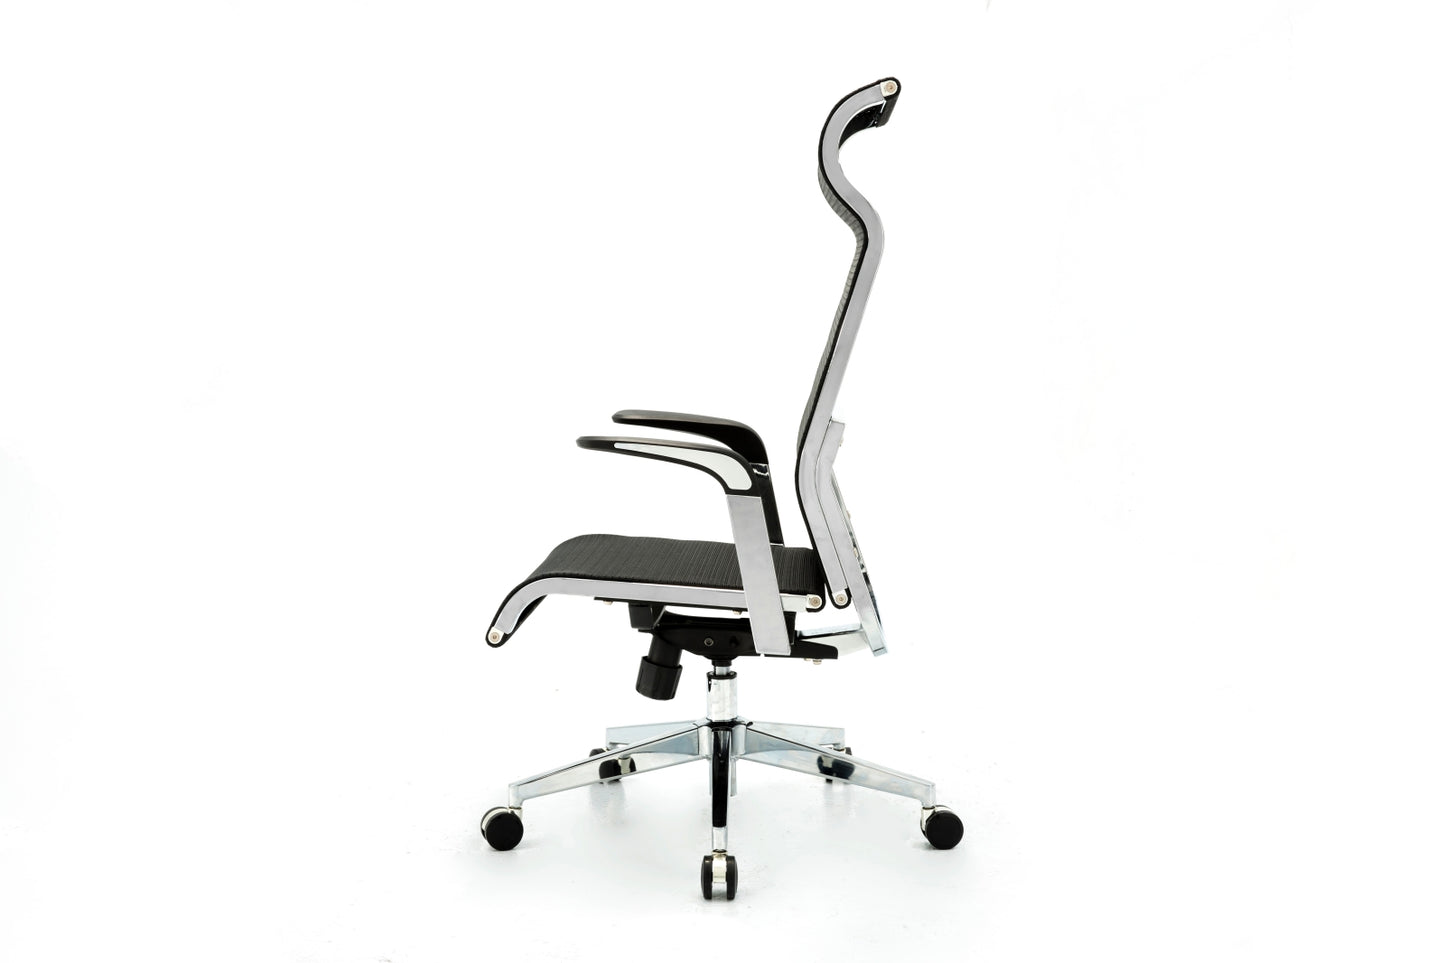 Sihoo X1 Ergonomic Chair